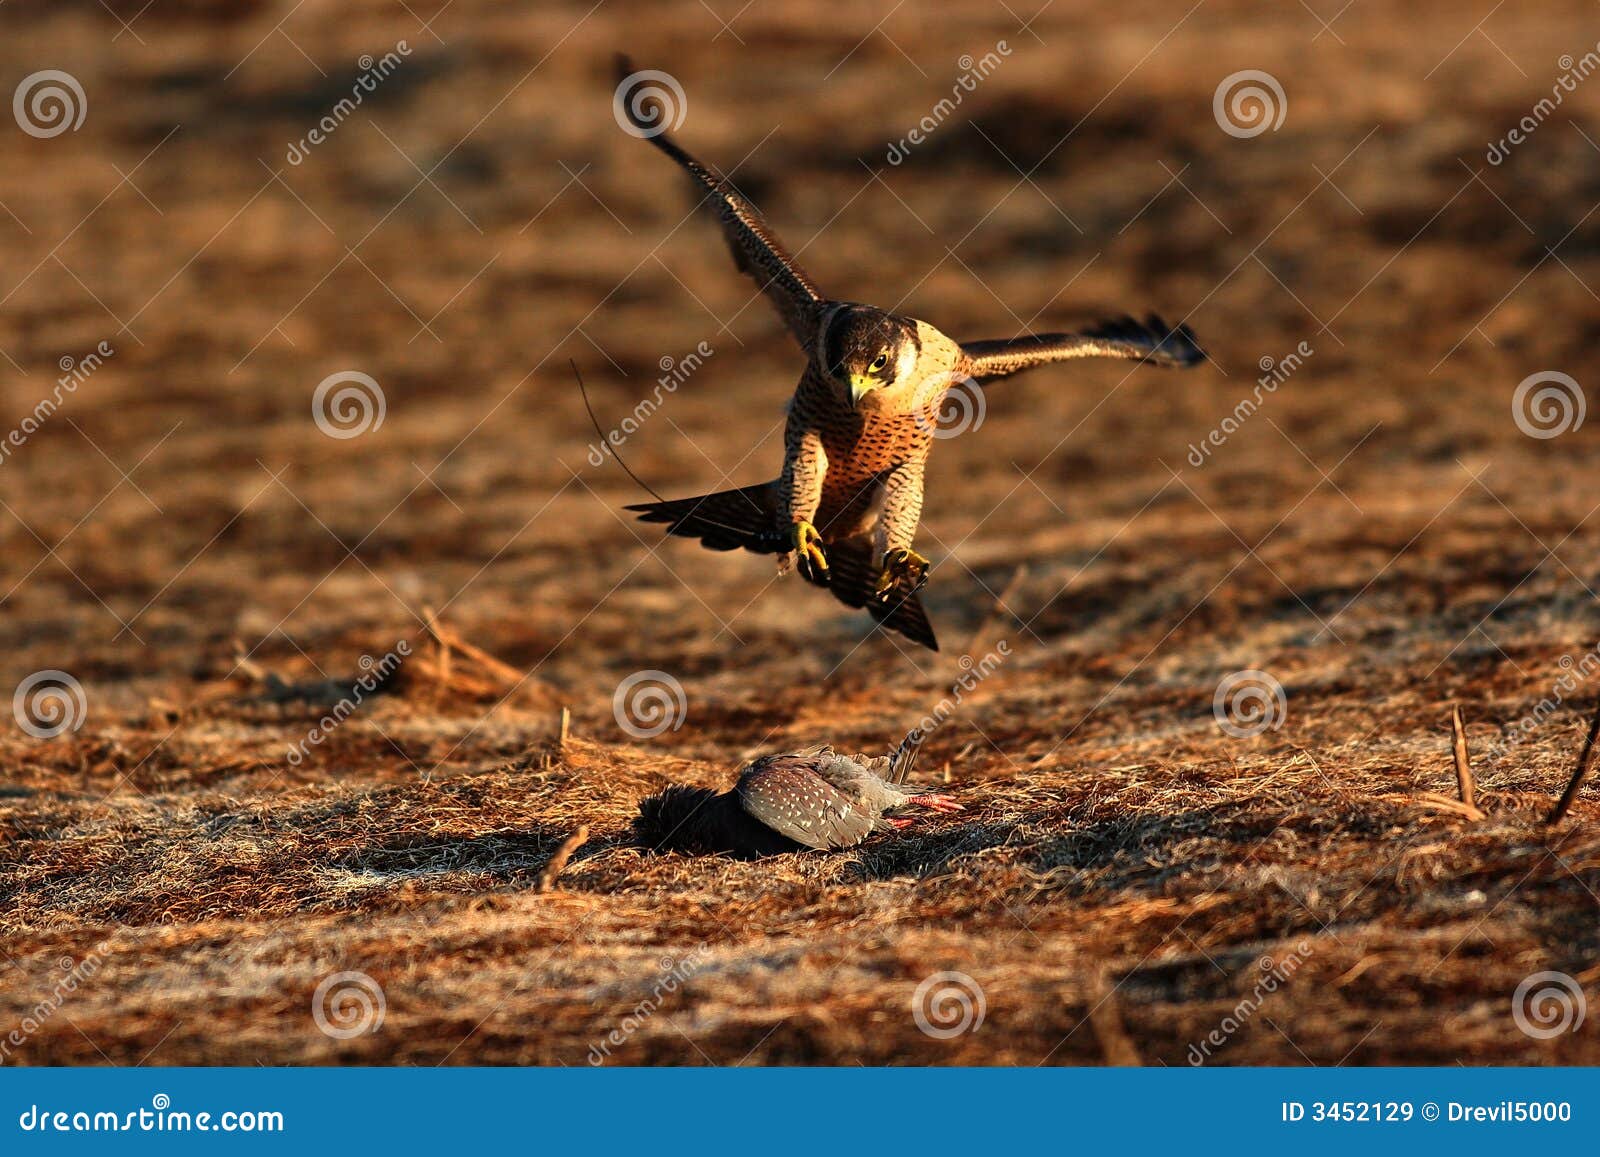 peregrine falcon on prey